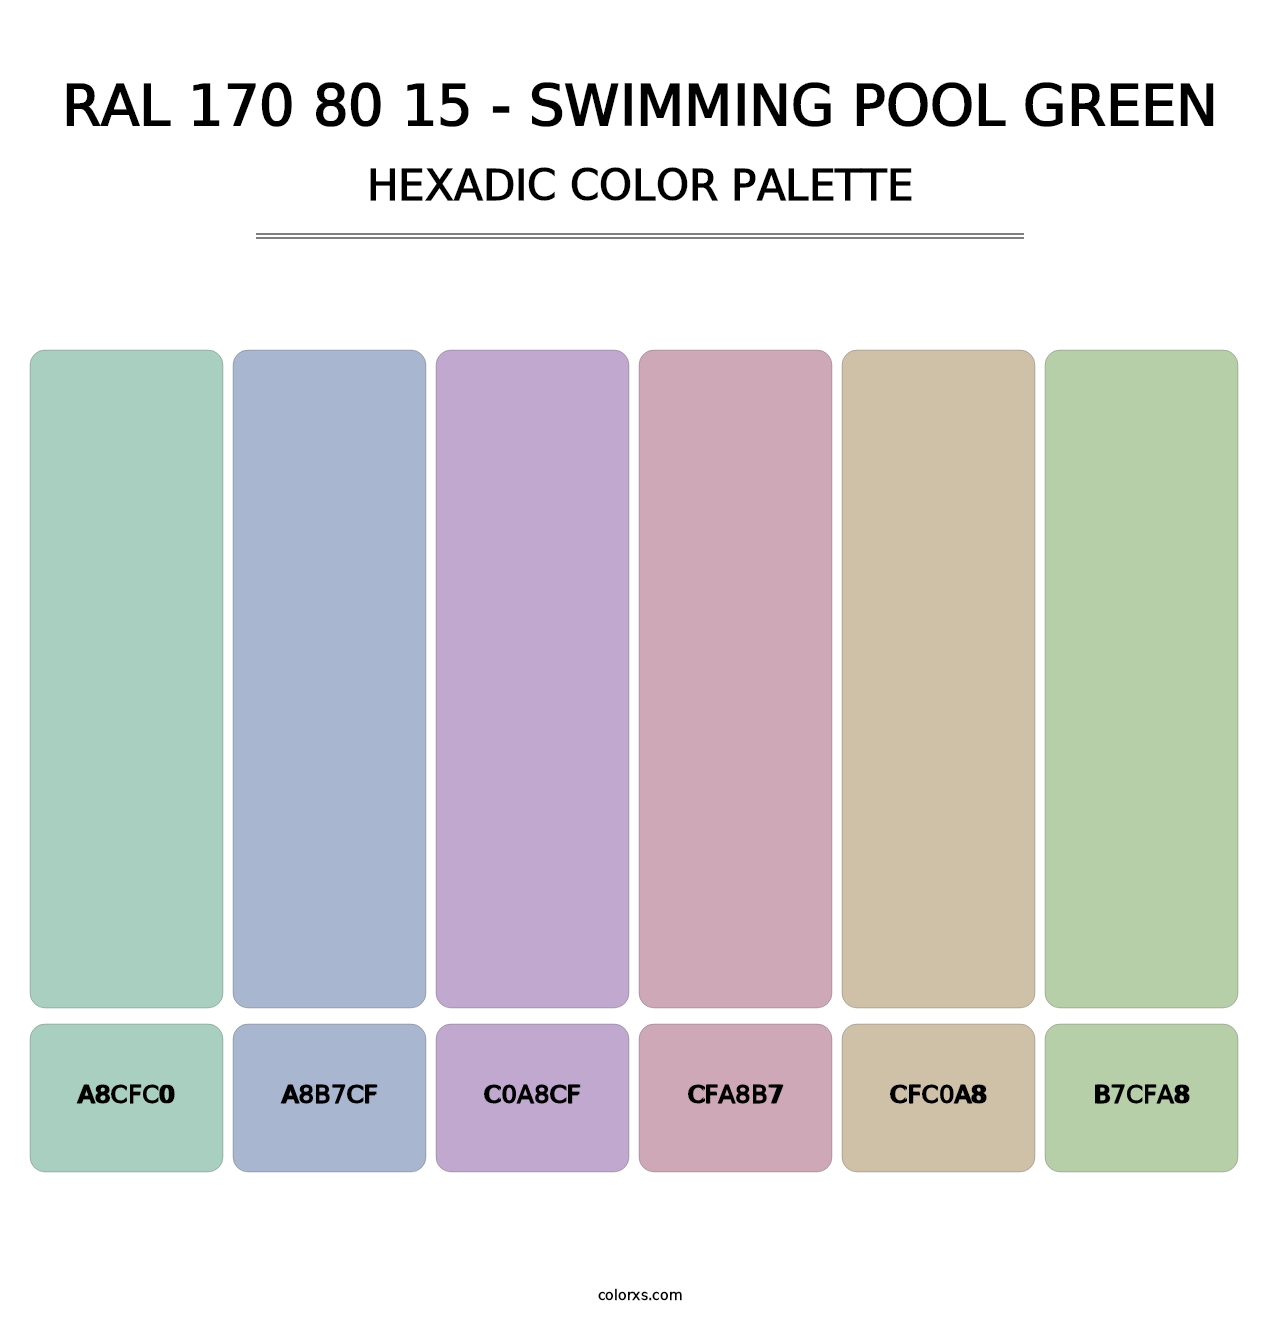 RAL 170 80 15 - Swimming Pool Green - Hexadic Color Palette